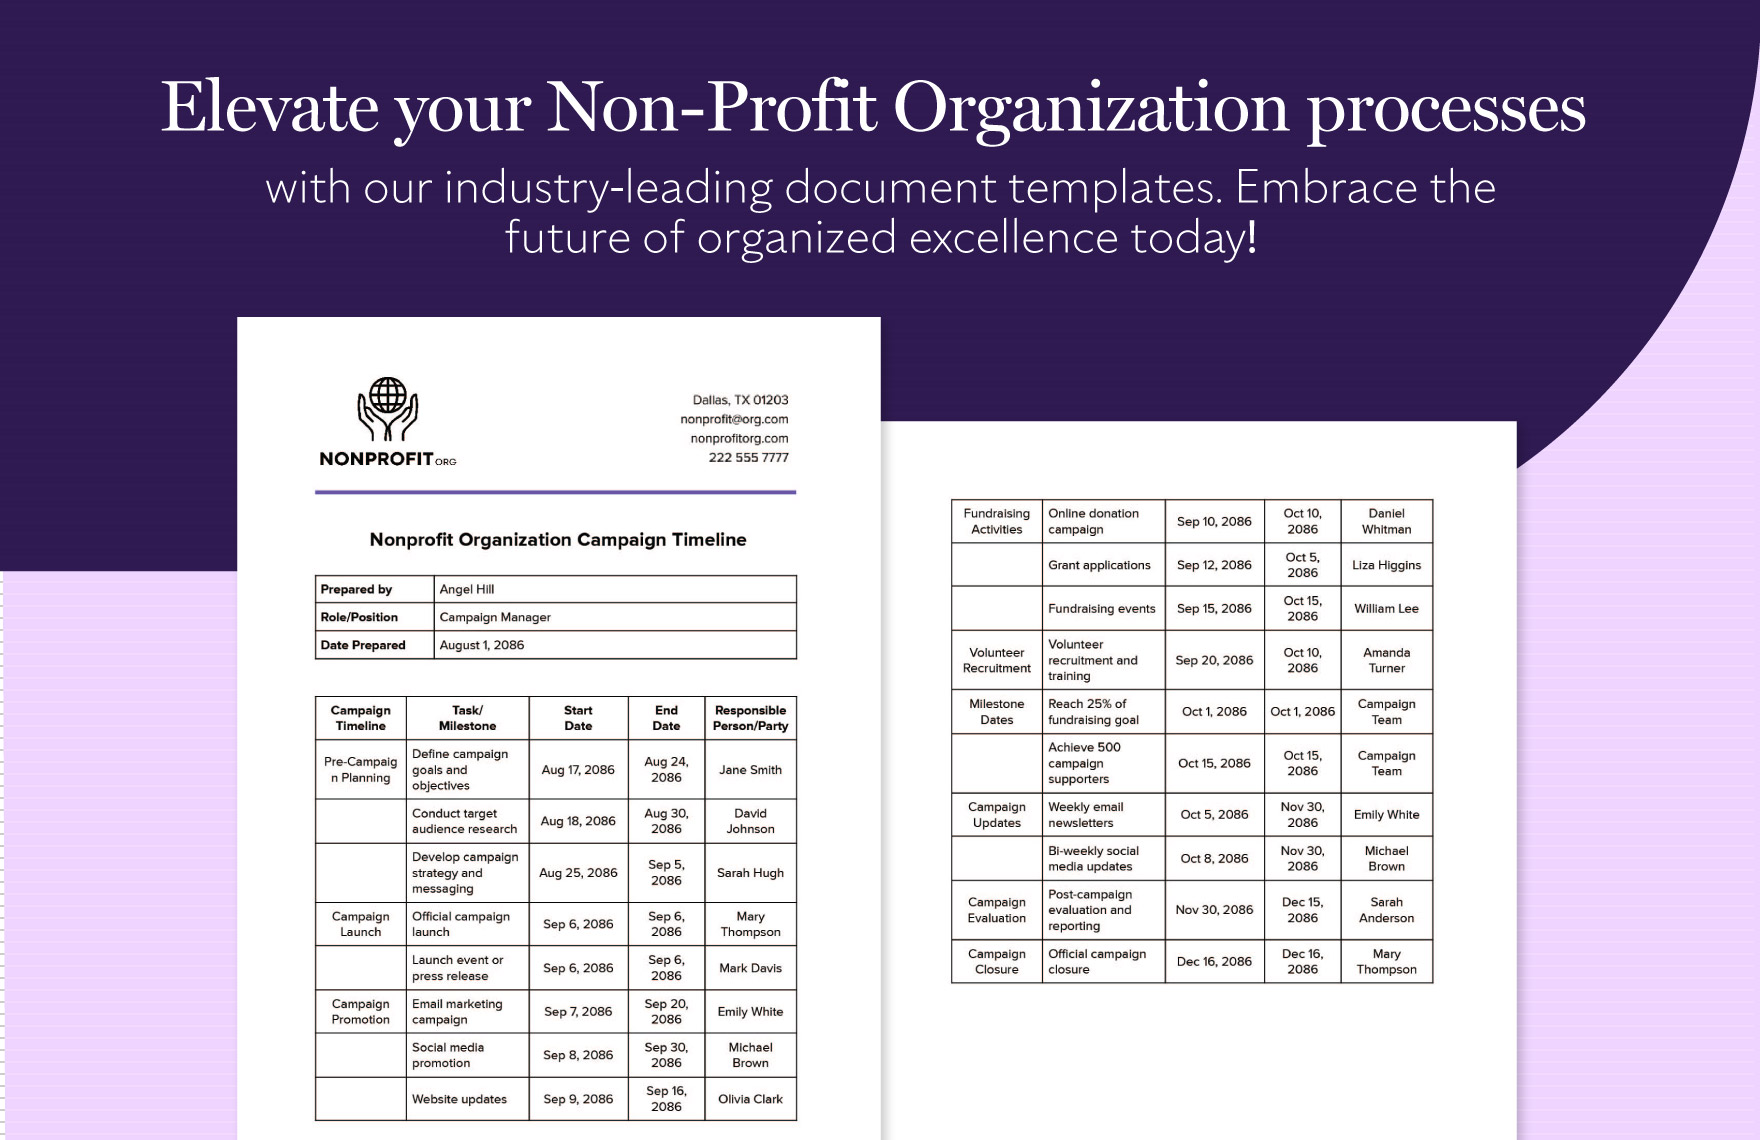 Nonprofit Organization Campaign Timeline Template